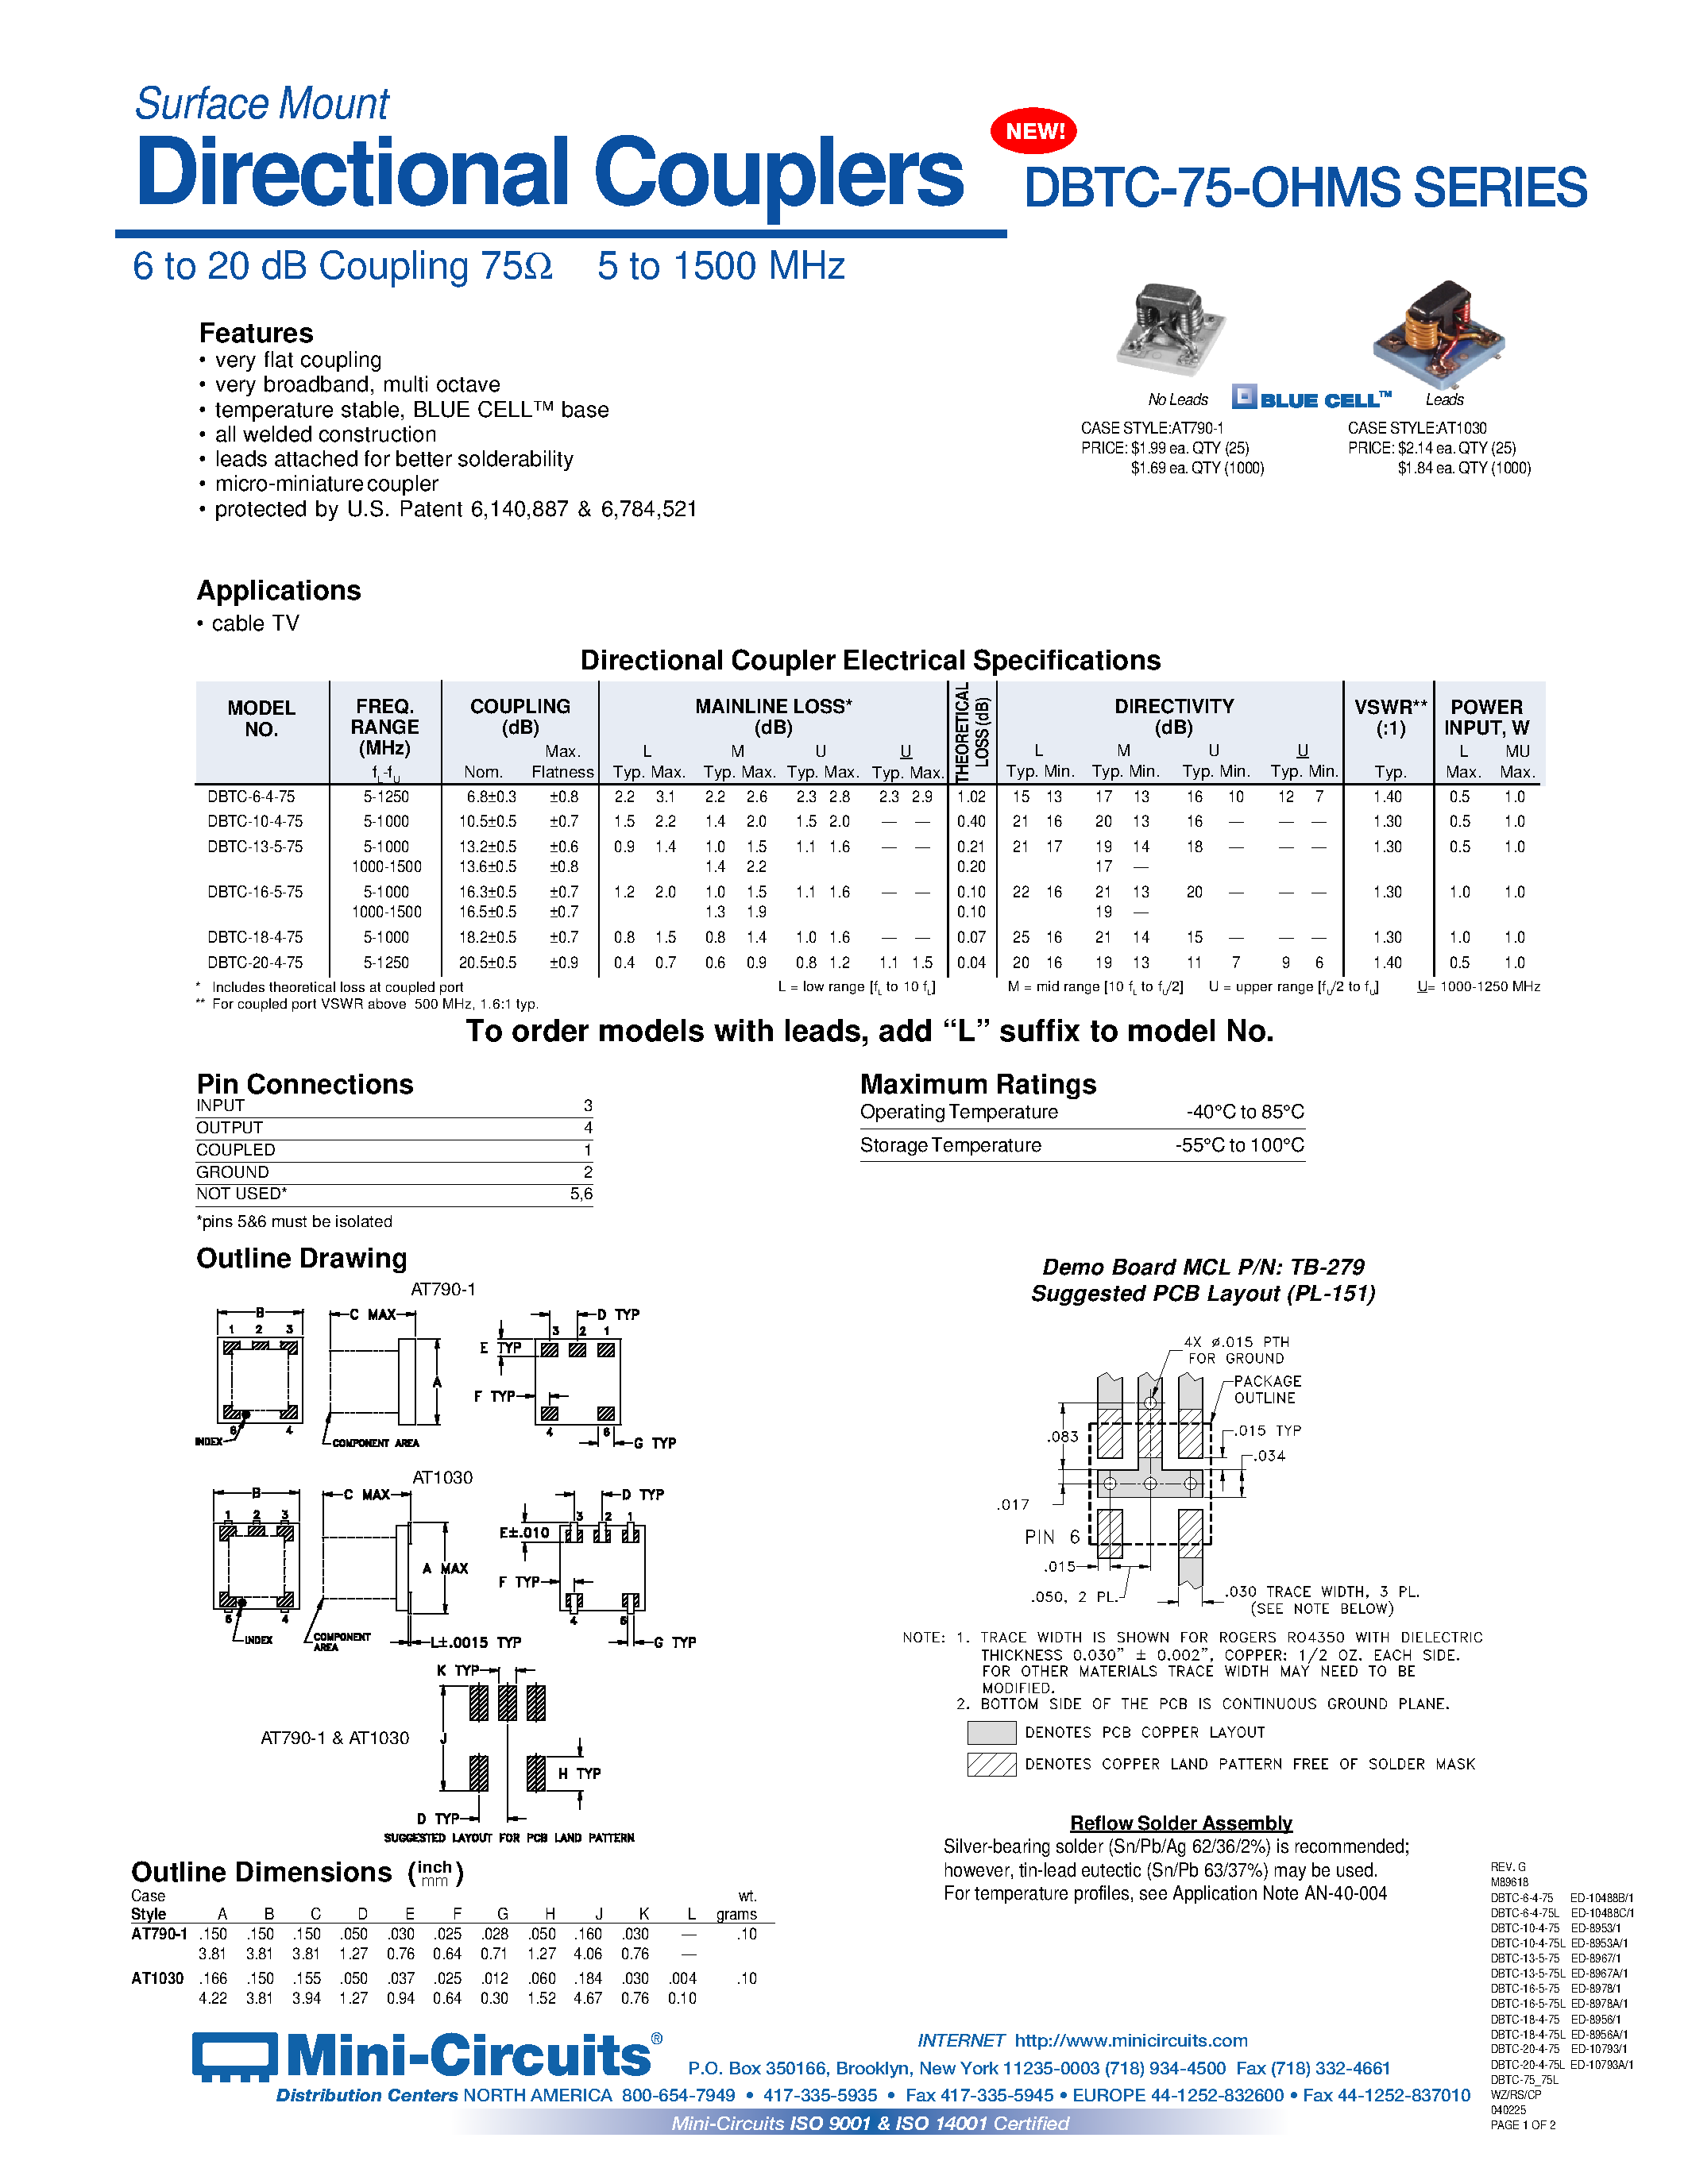 Даташит DBTC-18-4-75 - Surface Mount Directional Couplers страница 1